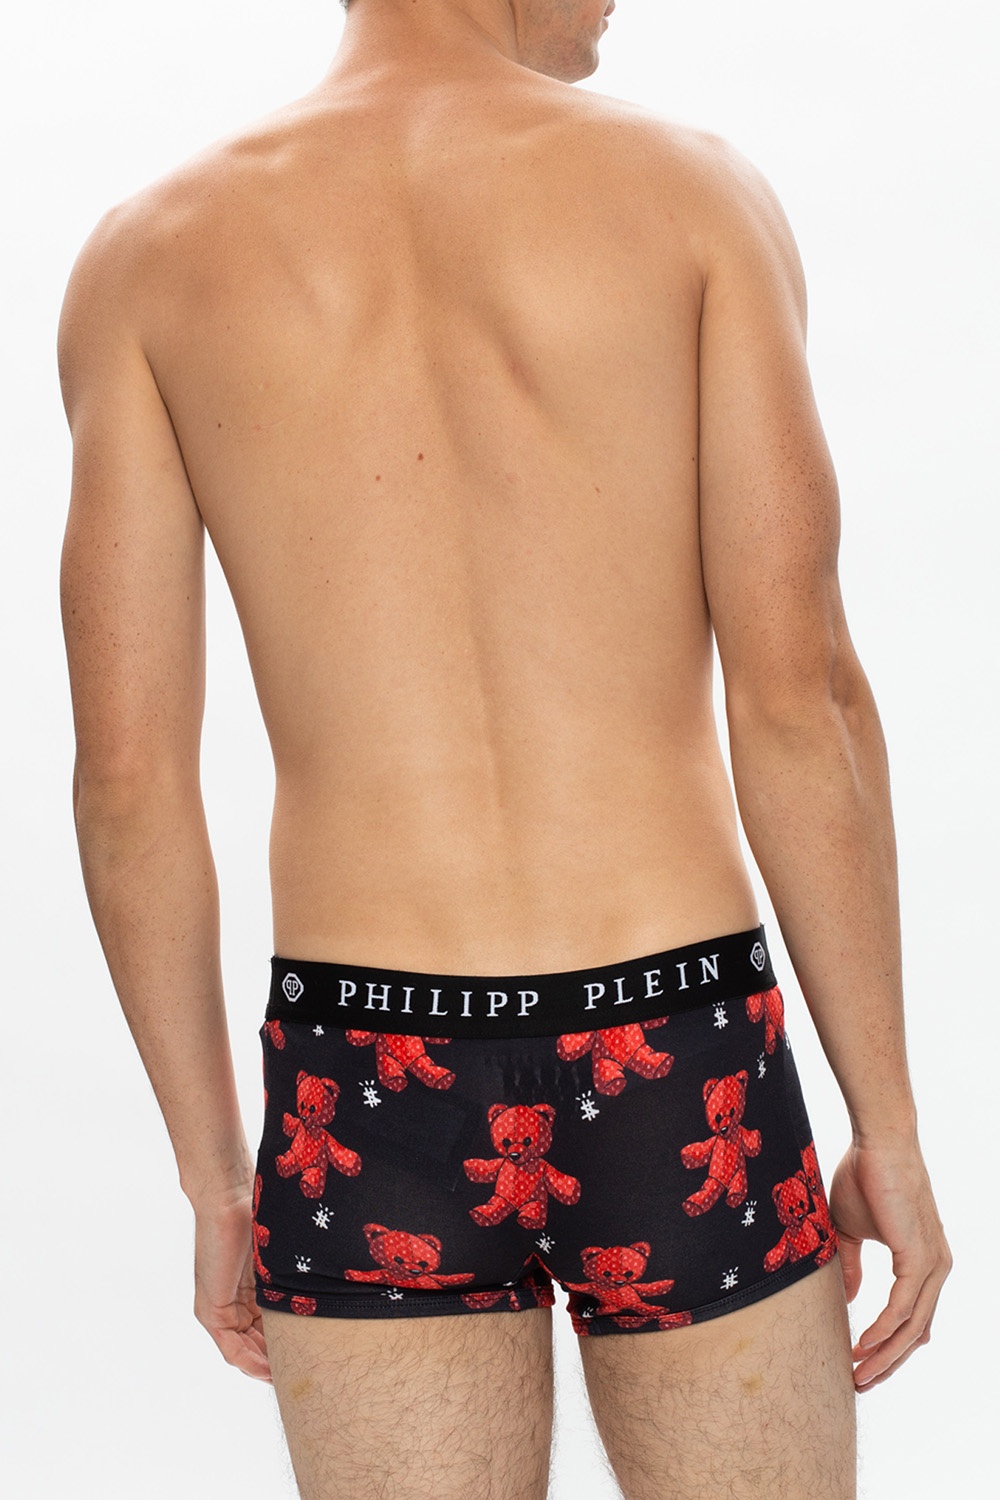  Philipp Plein Boxers S : Clothing, Shoes & Jewelry